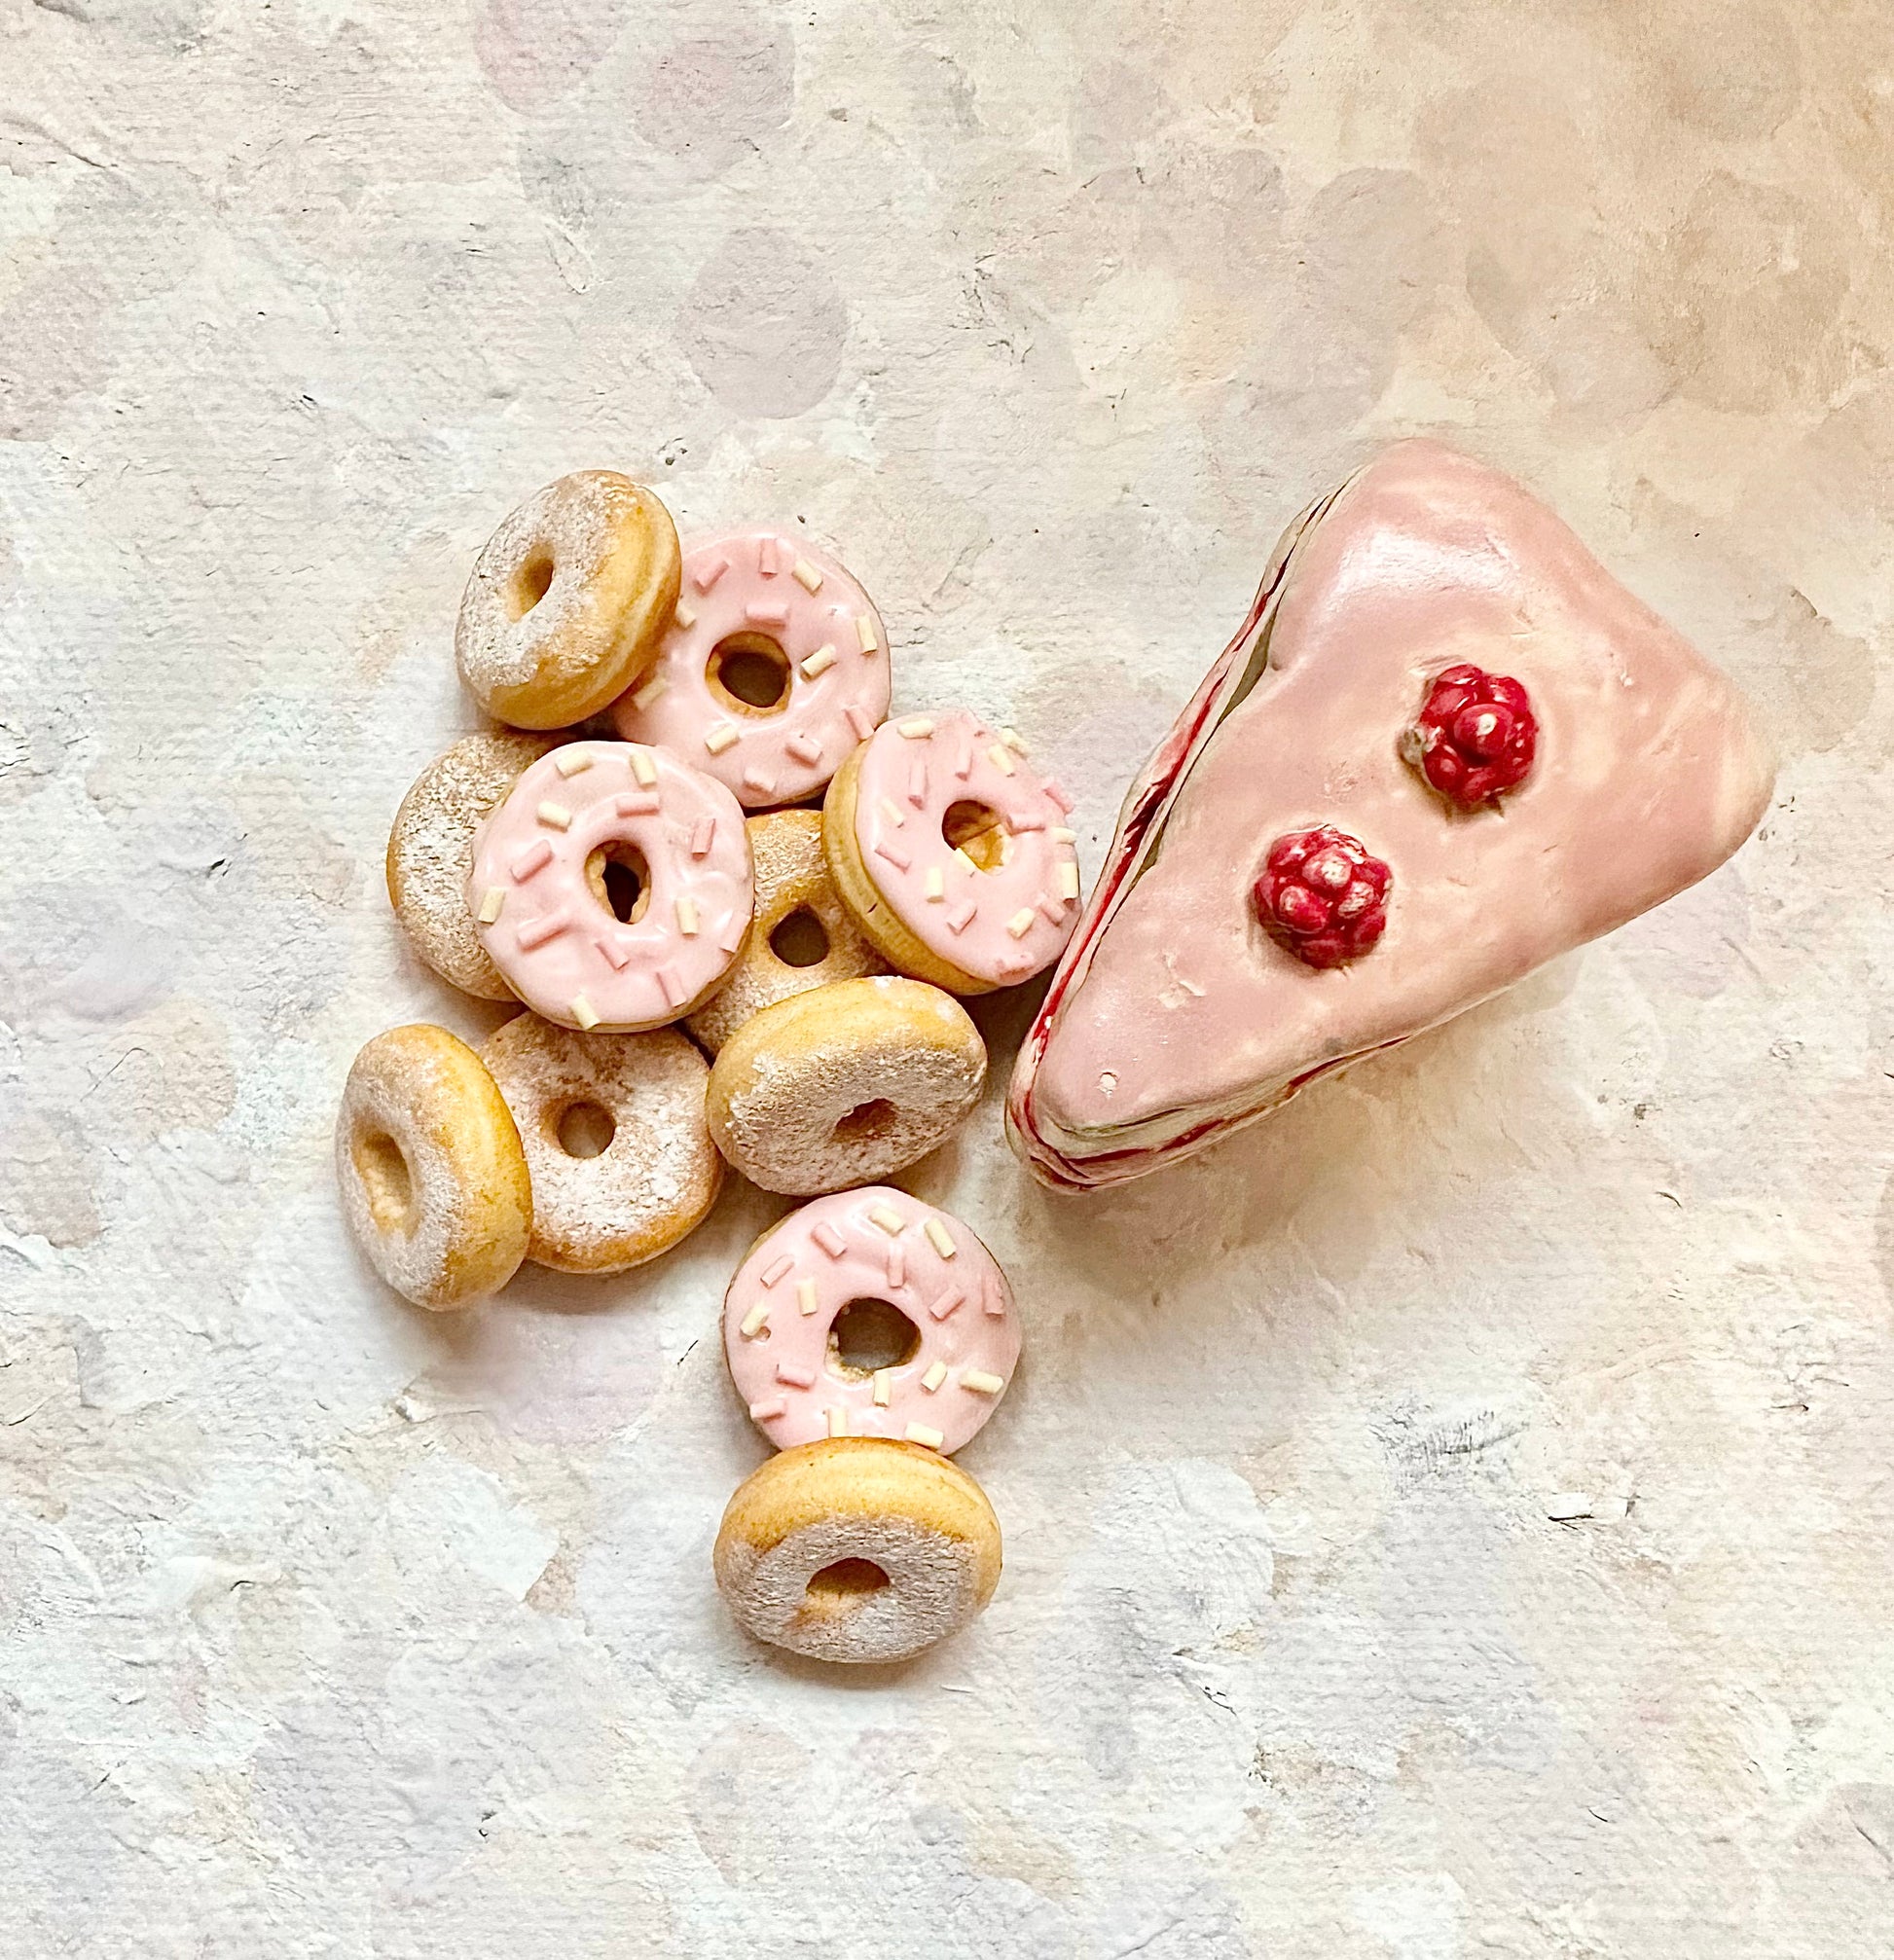 Set of Glazed and Sprinkled Donuts